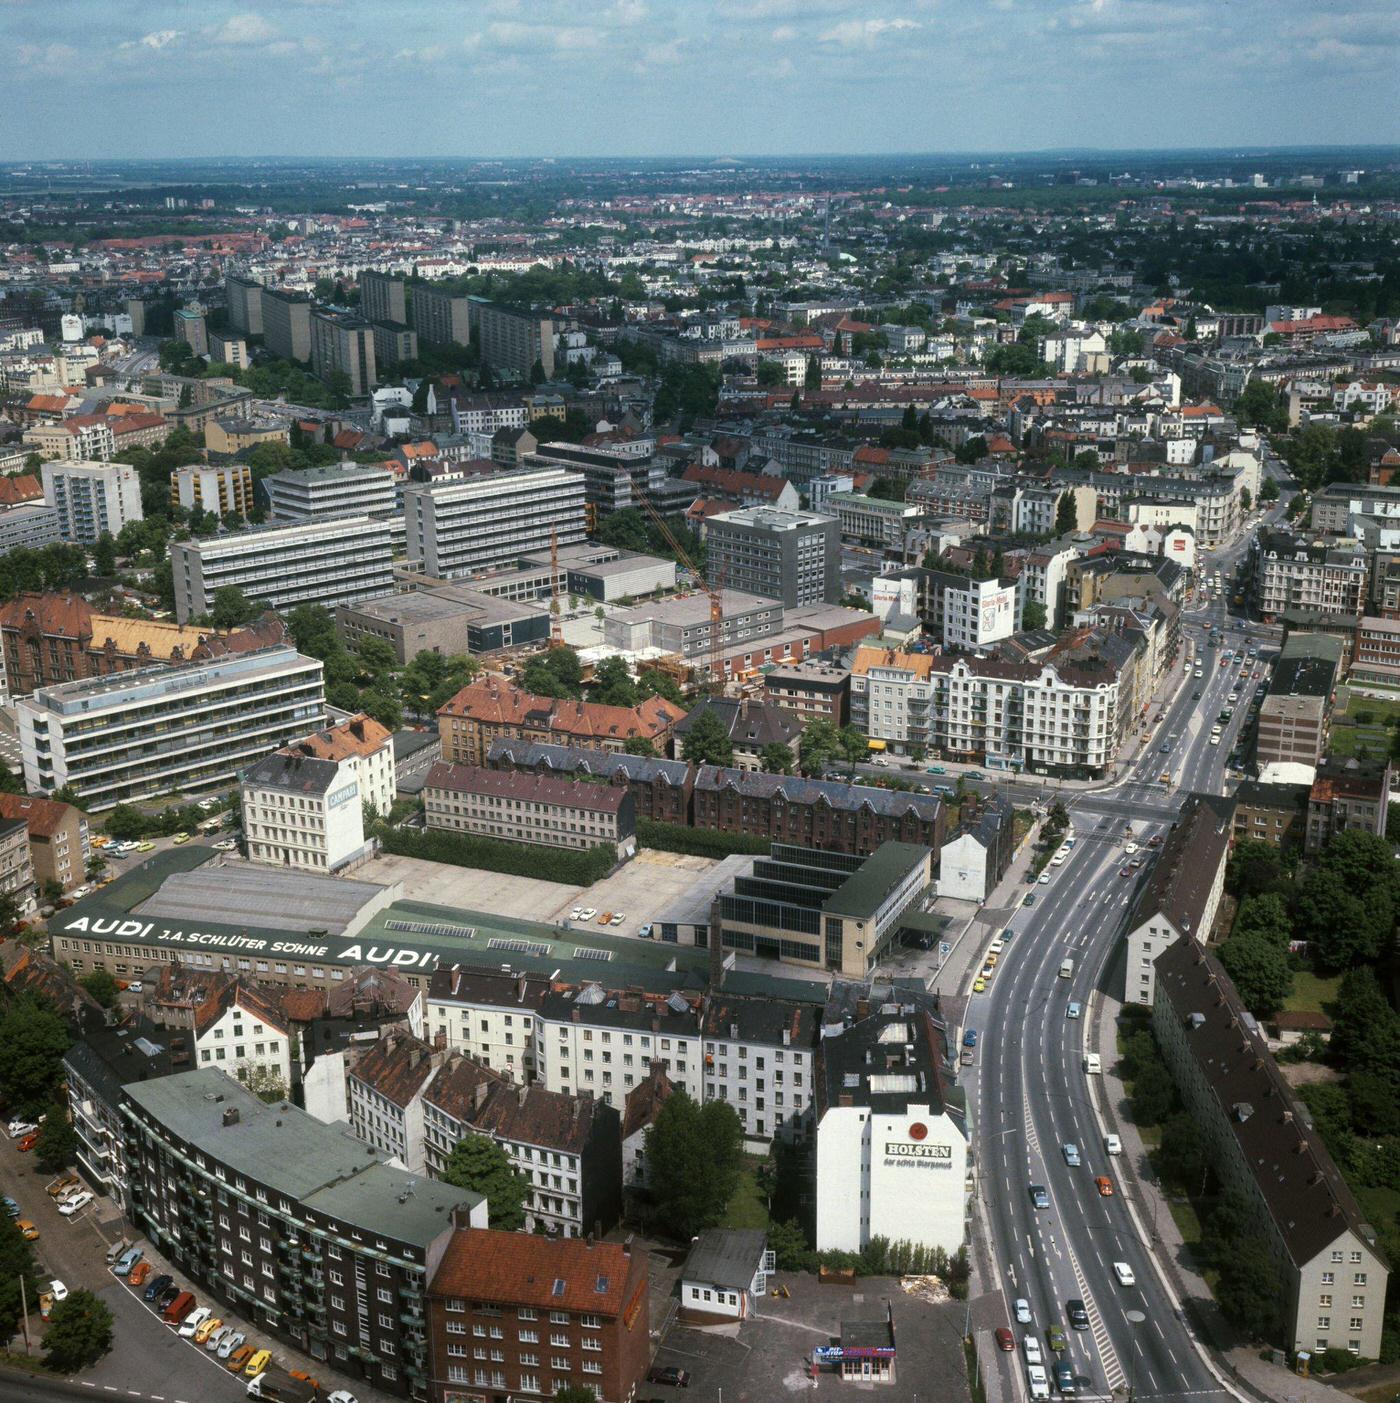 Panoramic view of Hamburg, Germany in the 1970s.